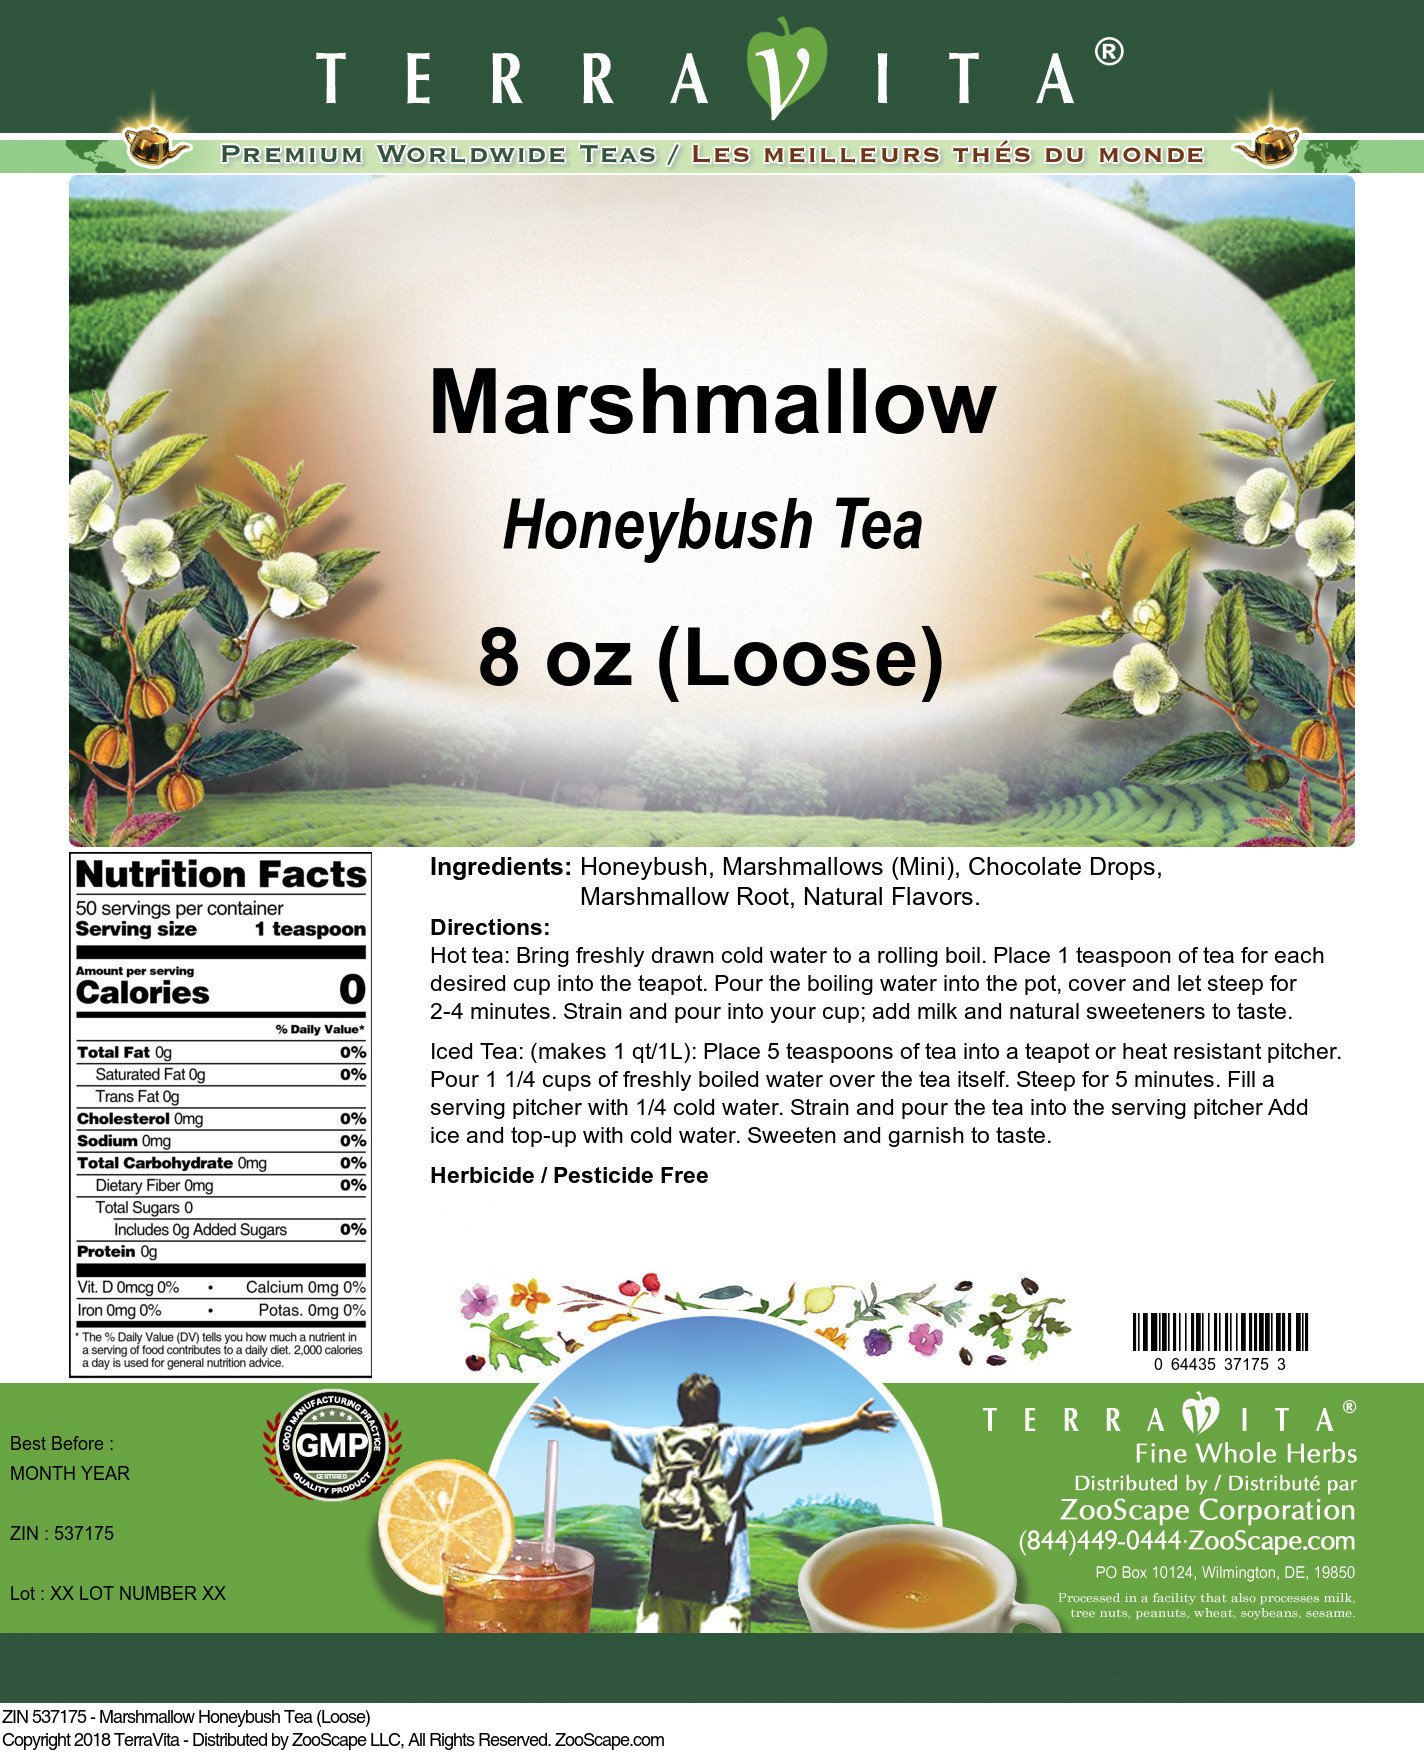 Marshmallow Honeybush Tea (Loose) - Label